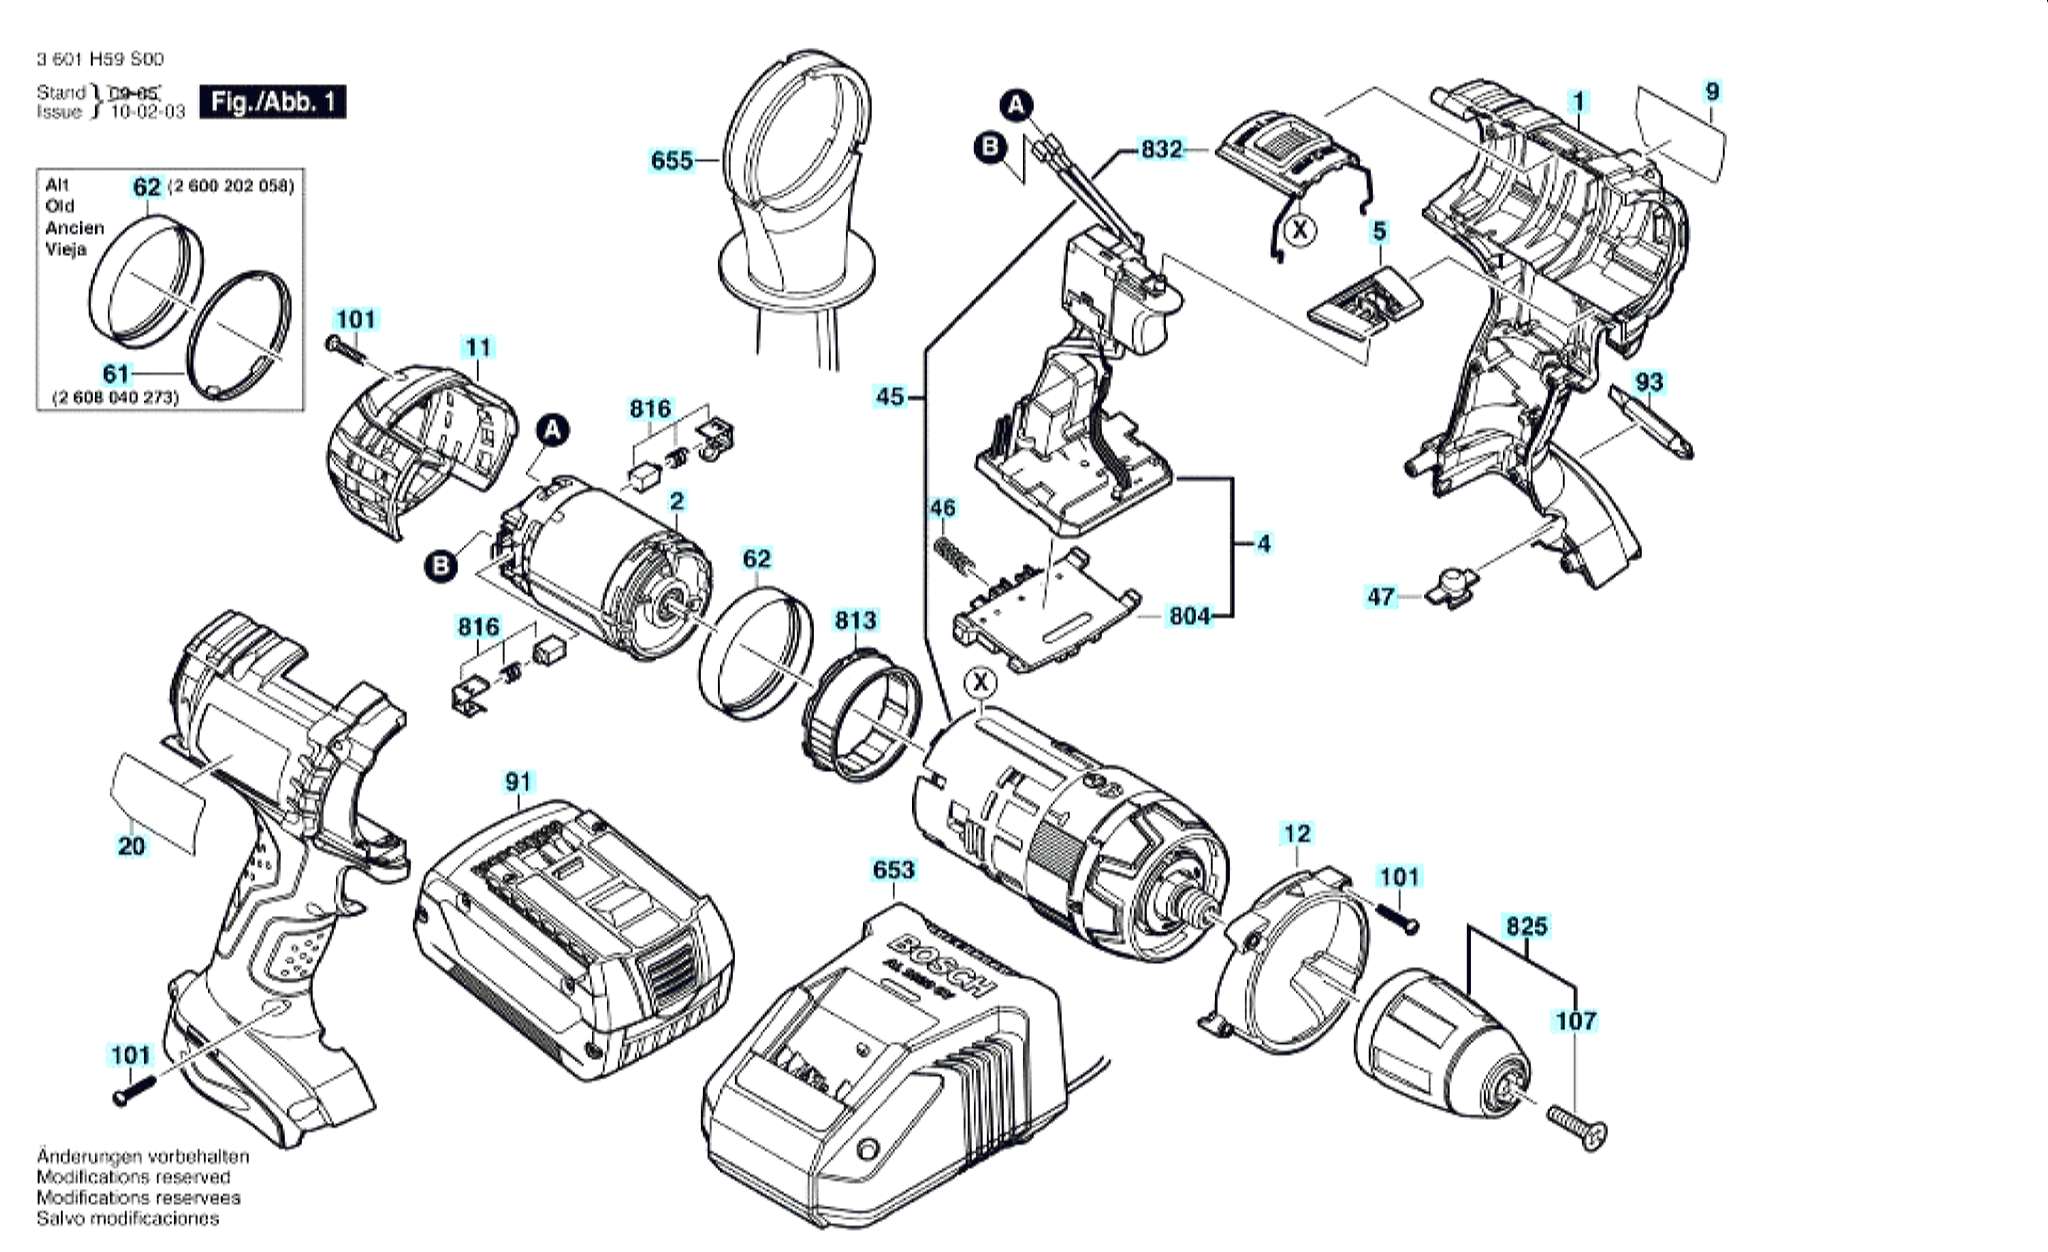 Запчасти, схема и деталировка Bosch GSB 18 VE-2-LI (ТИП 3601H59S00)